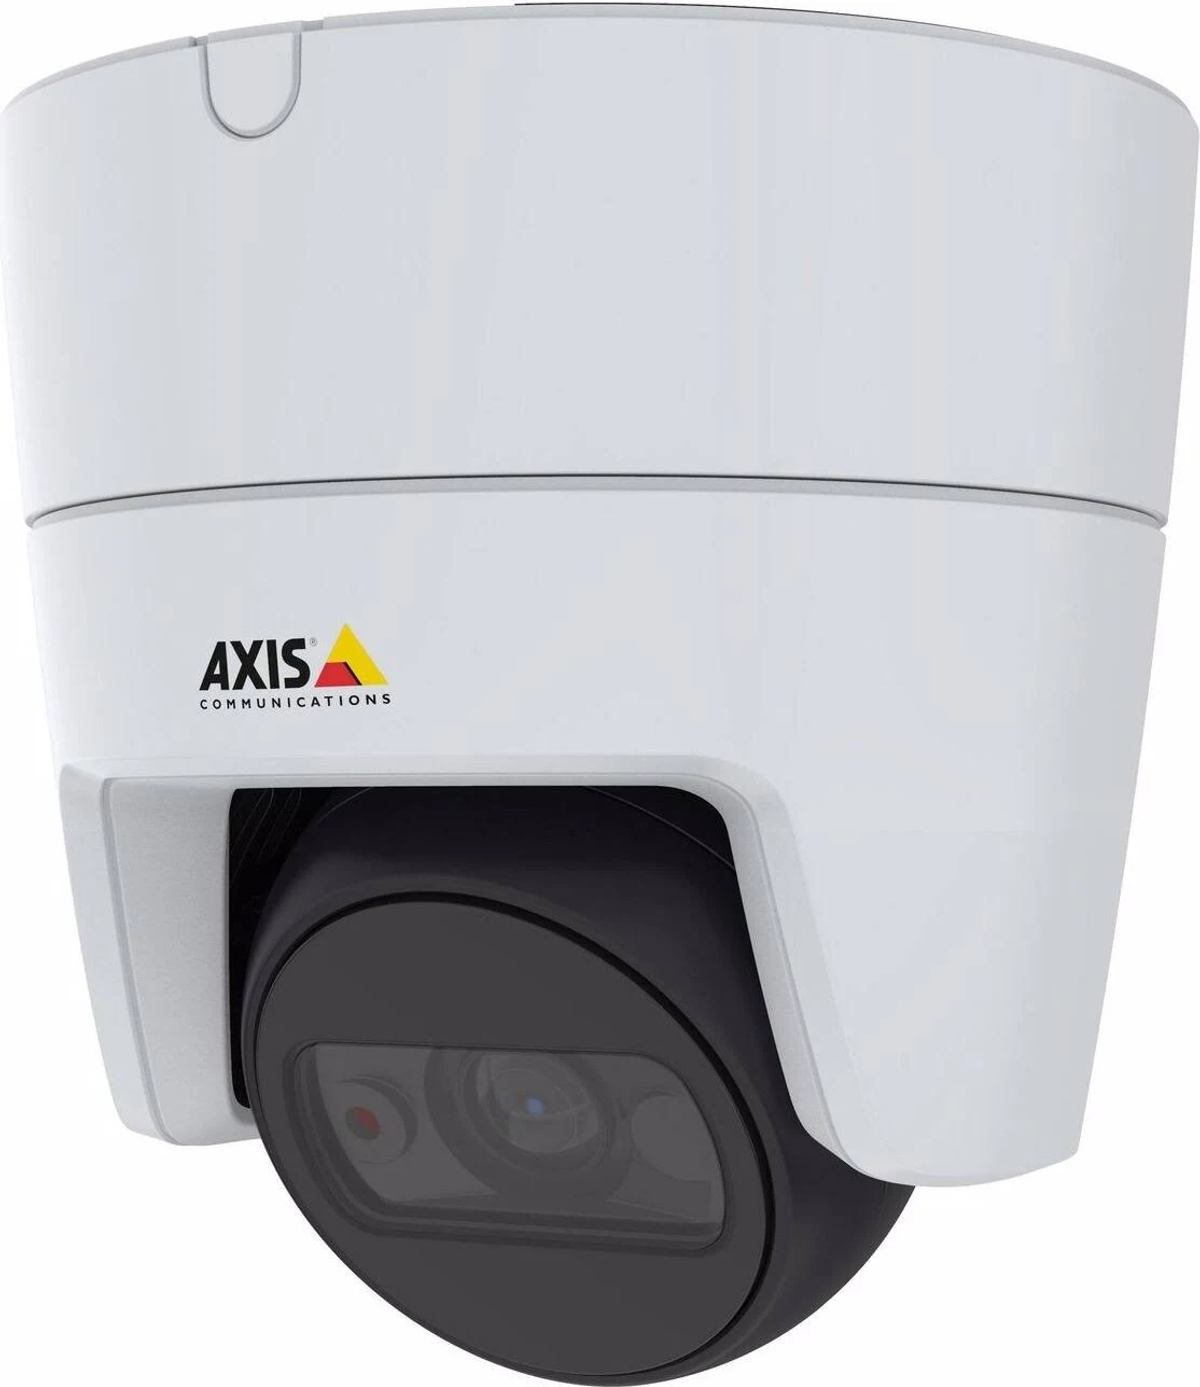 AXIS 01605-001, 1512 x Netzwerkkamera, Video: Auflösung 2688